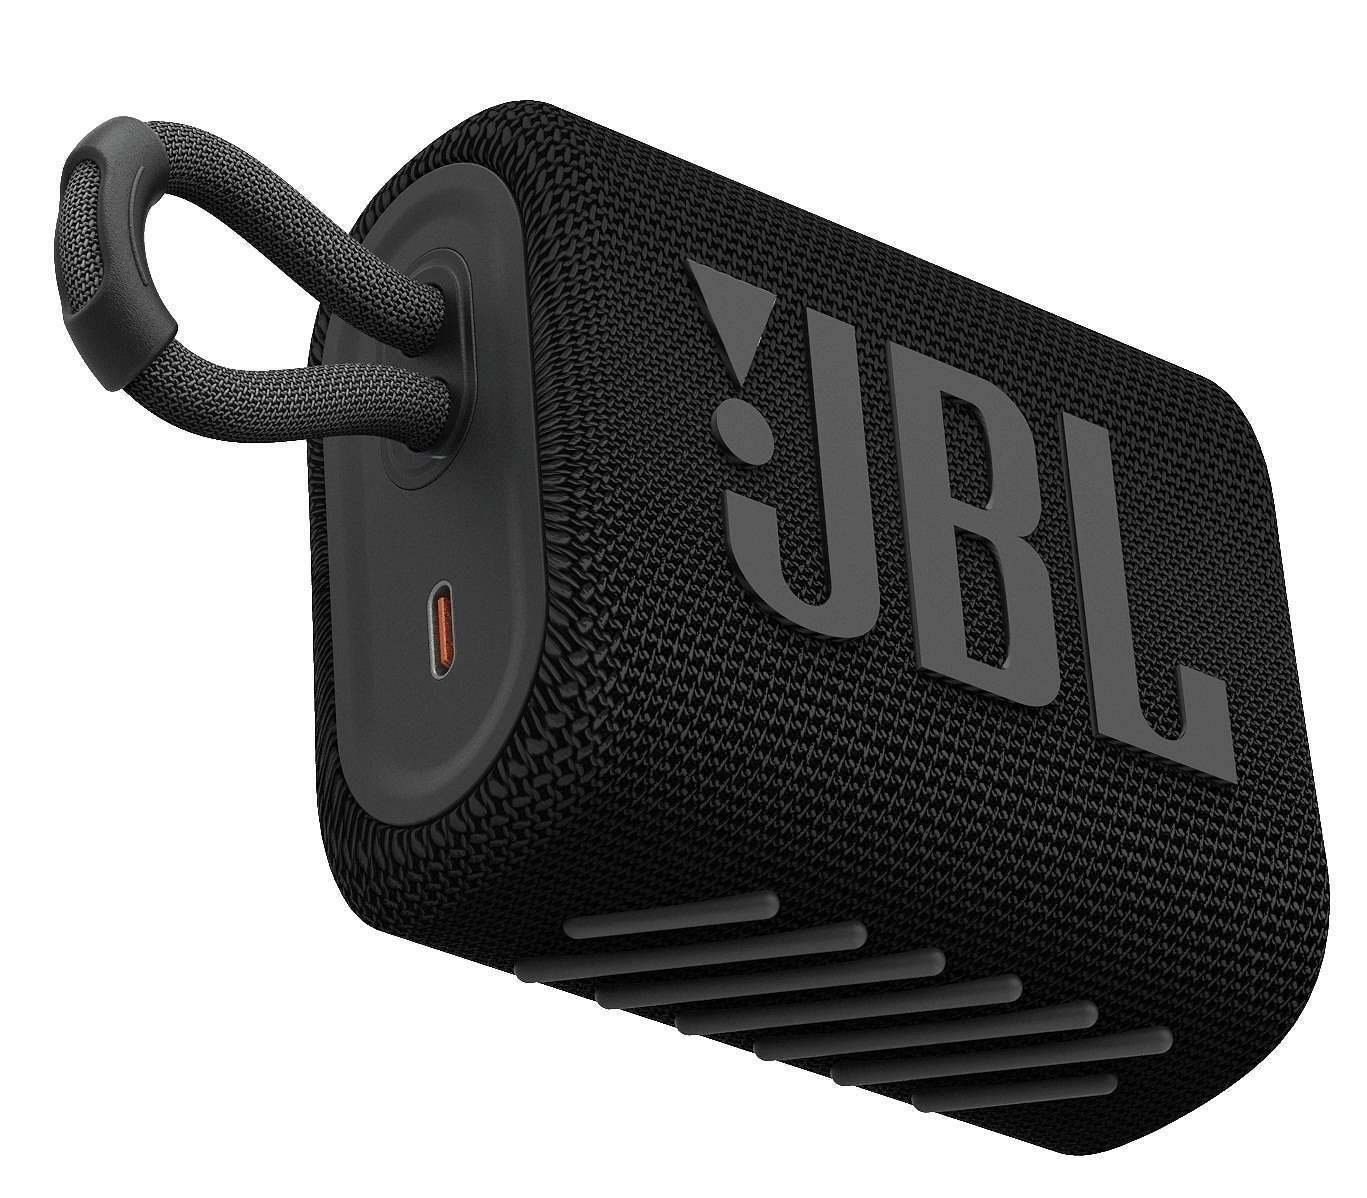 JBL GO3 Portable Bluetooth Speaker - Black